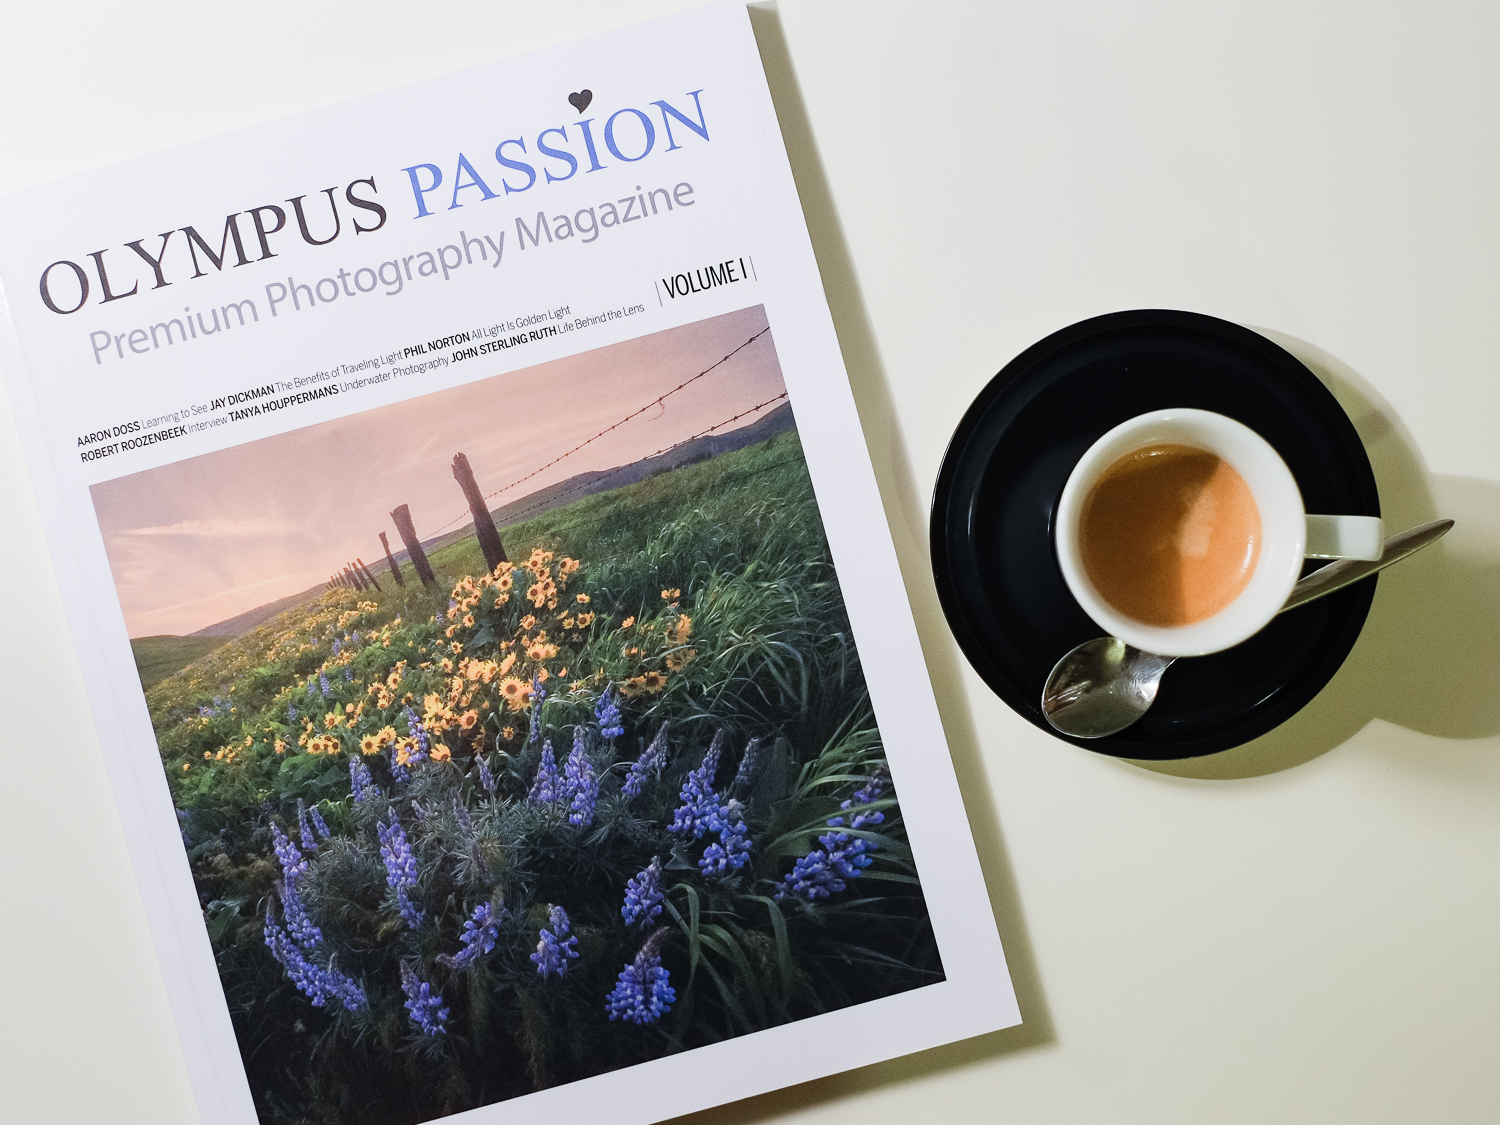 Olympus Passion Premium: the printed magazine for Olympus users